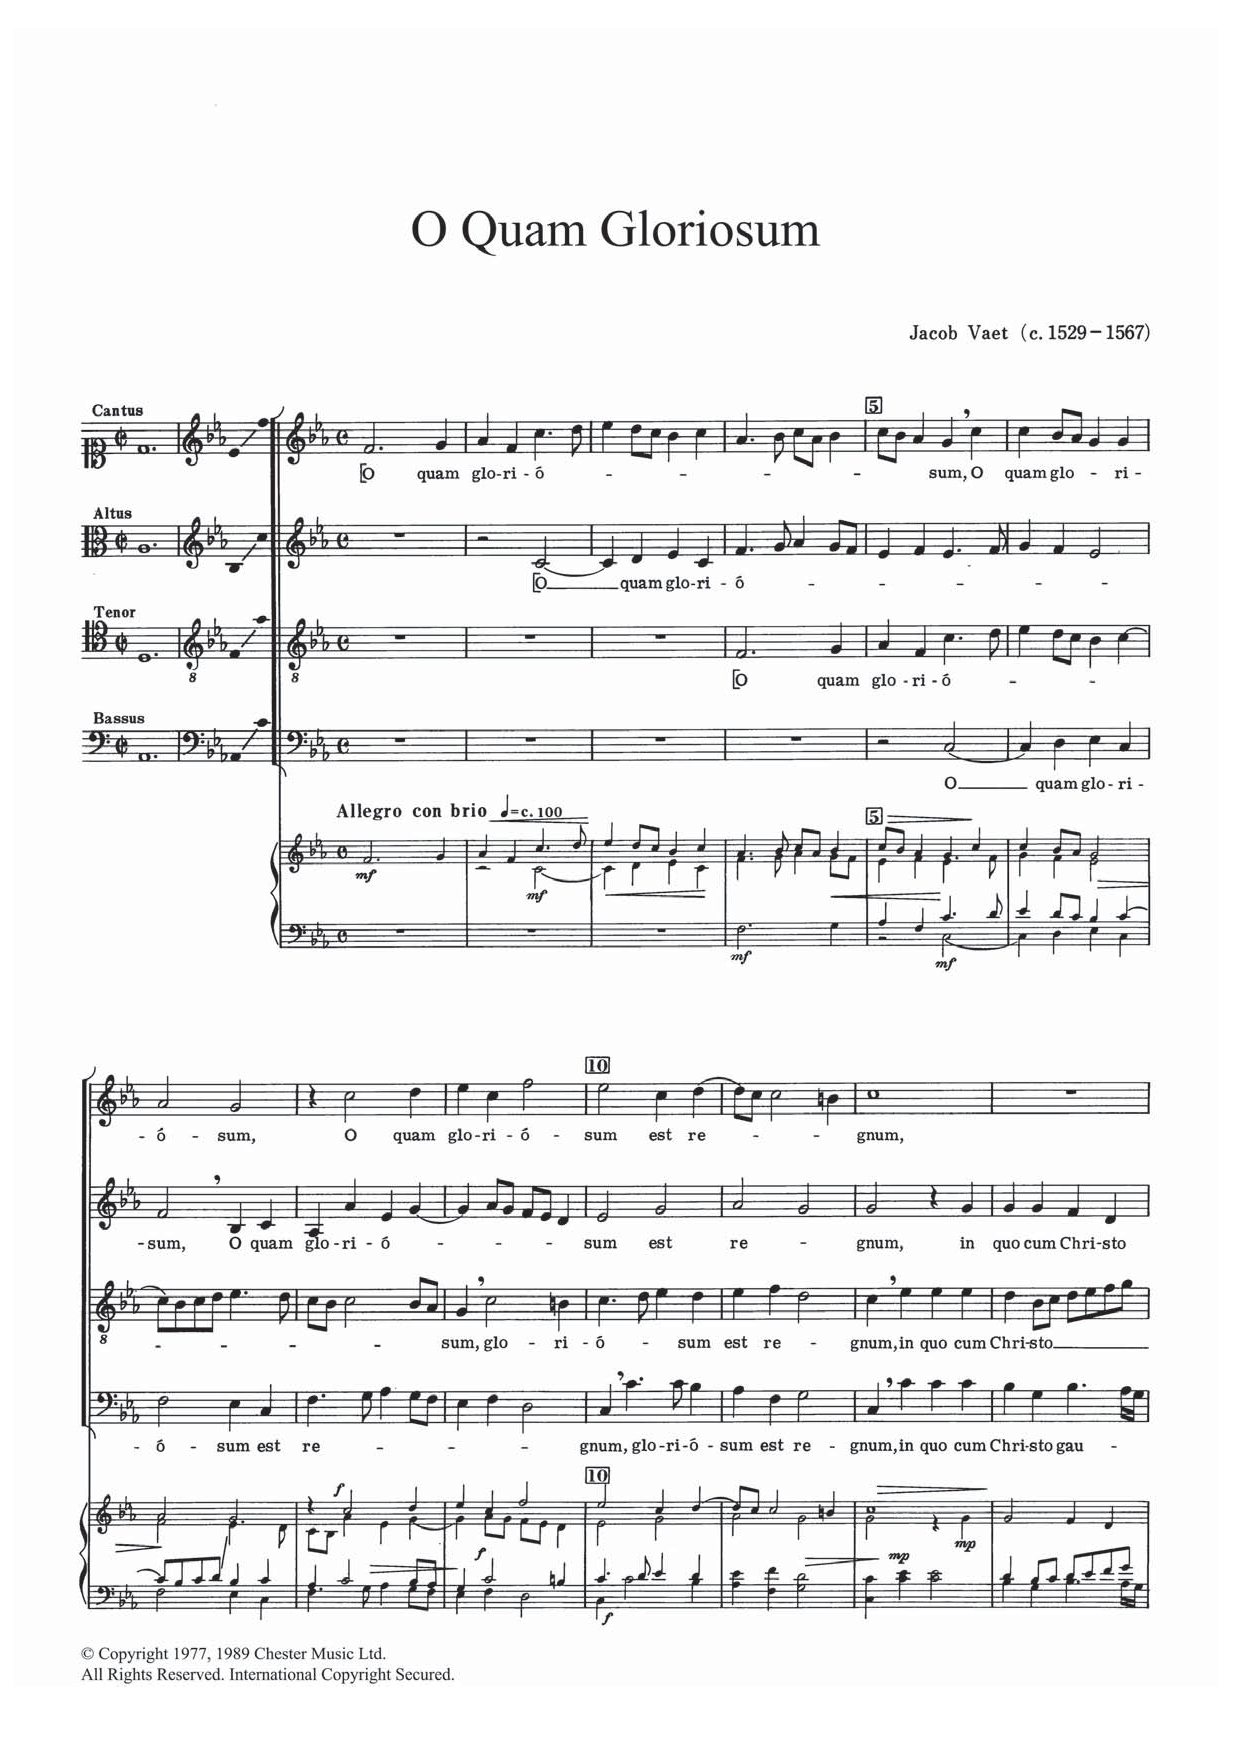 Jacob Vaet O Quam Gloriosum Sheet Music Notes & Chords for SATB - Download or Print PDF